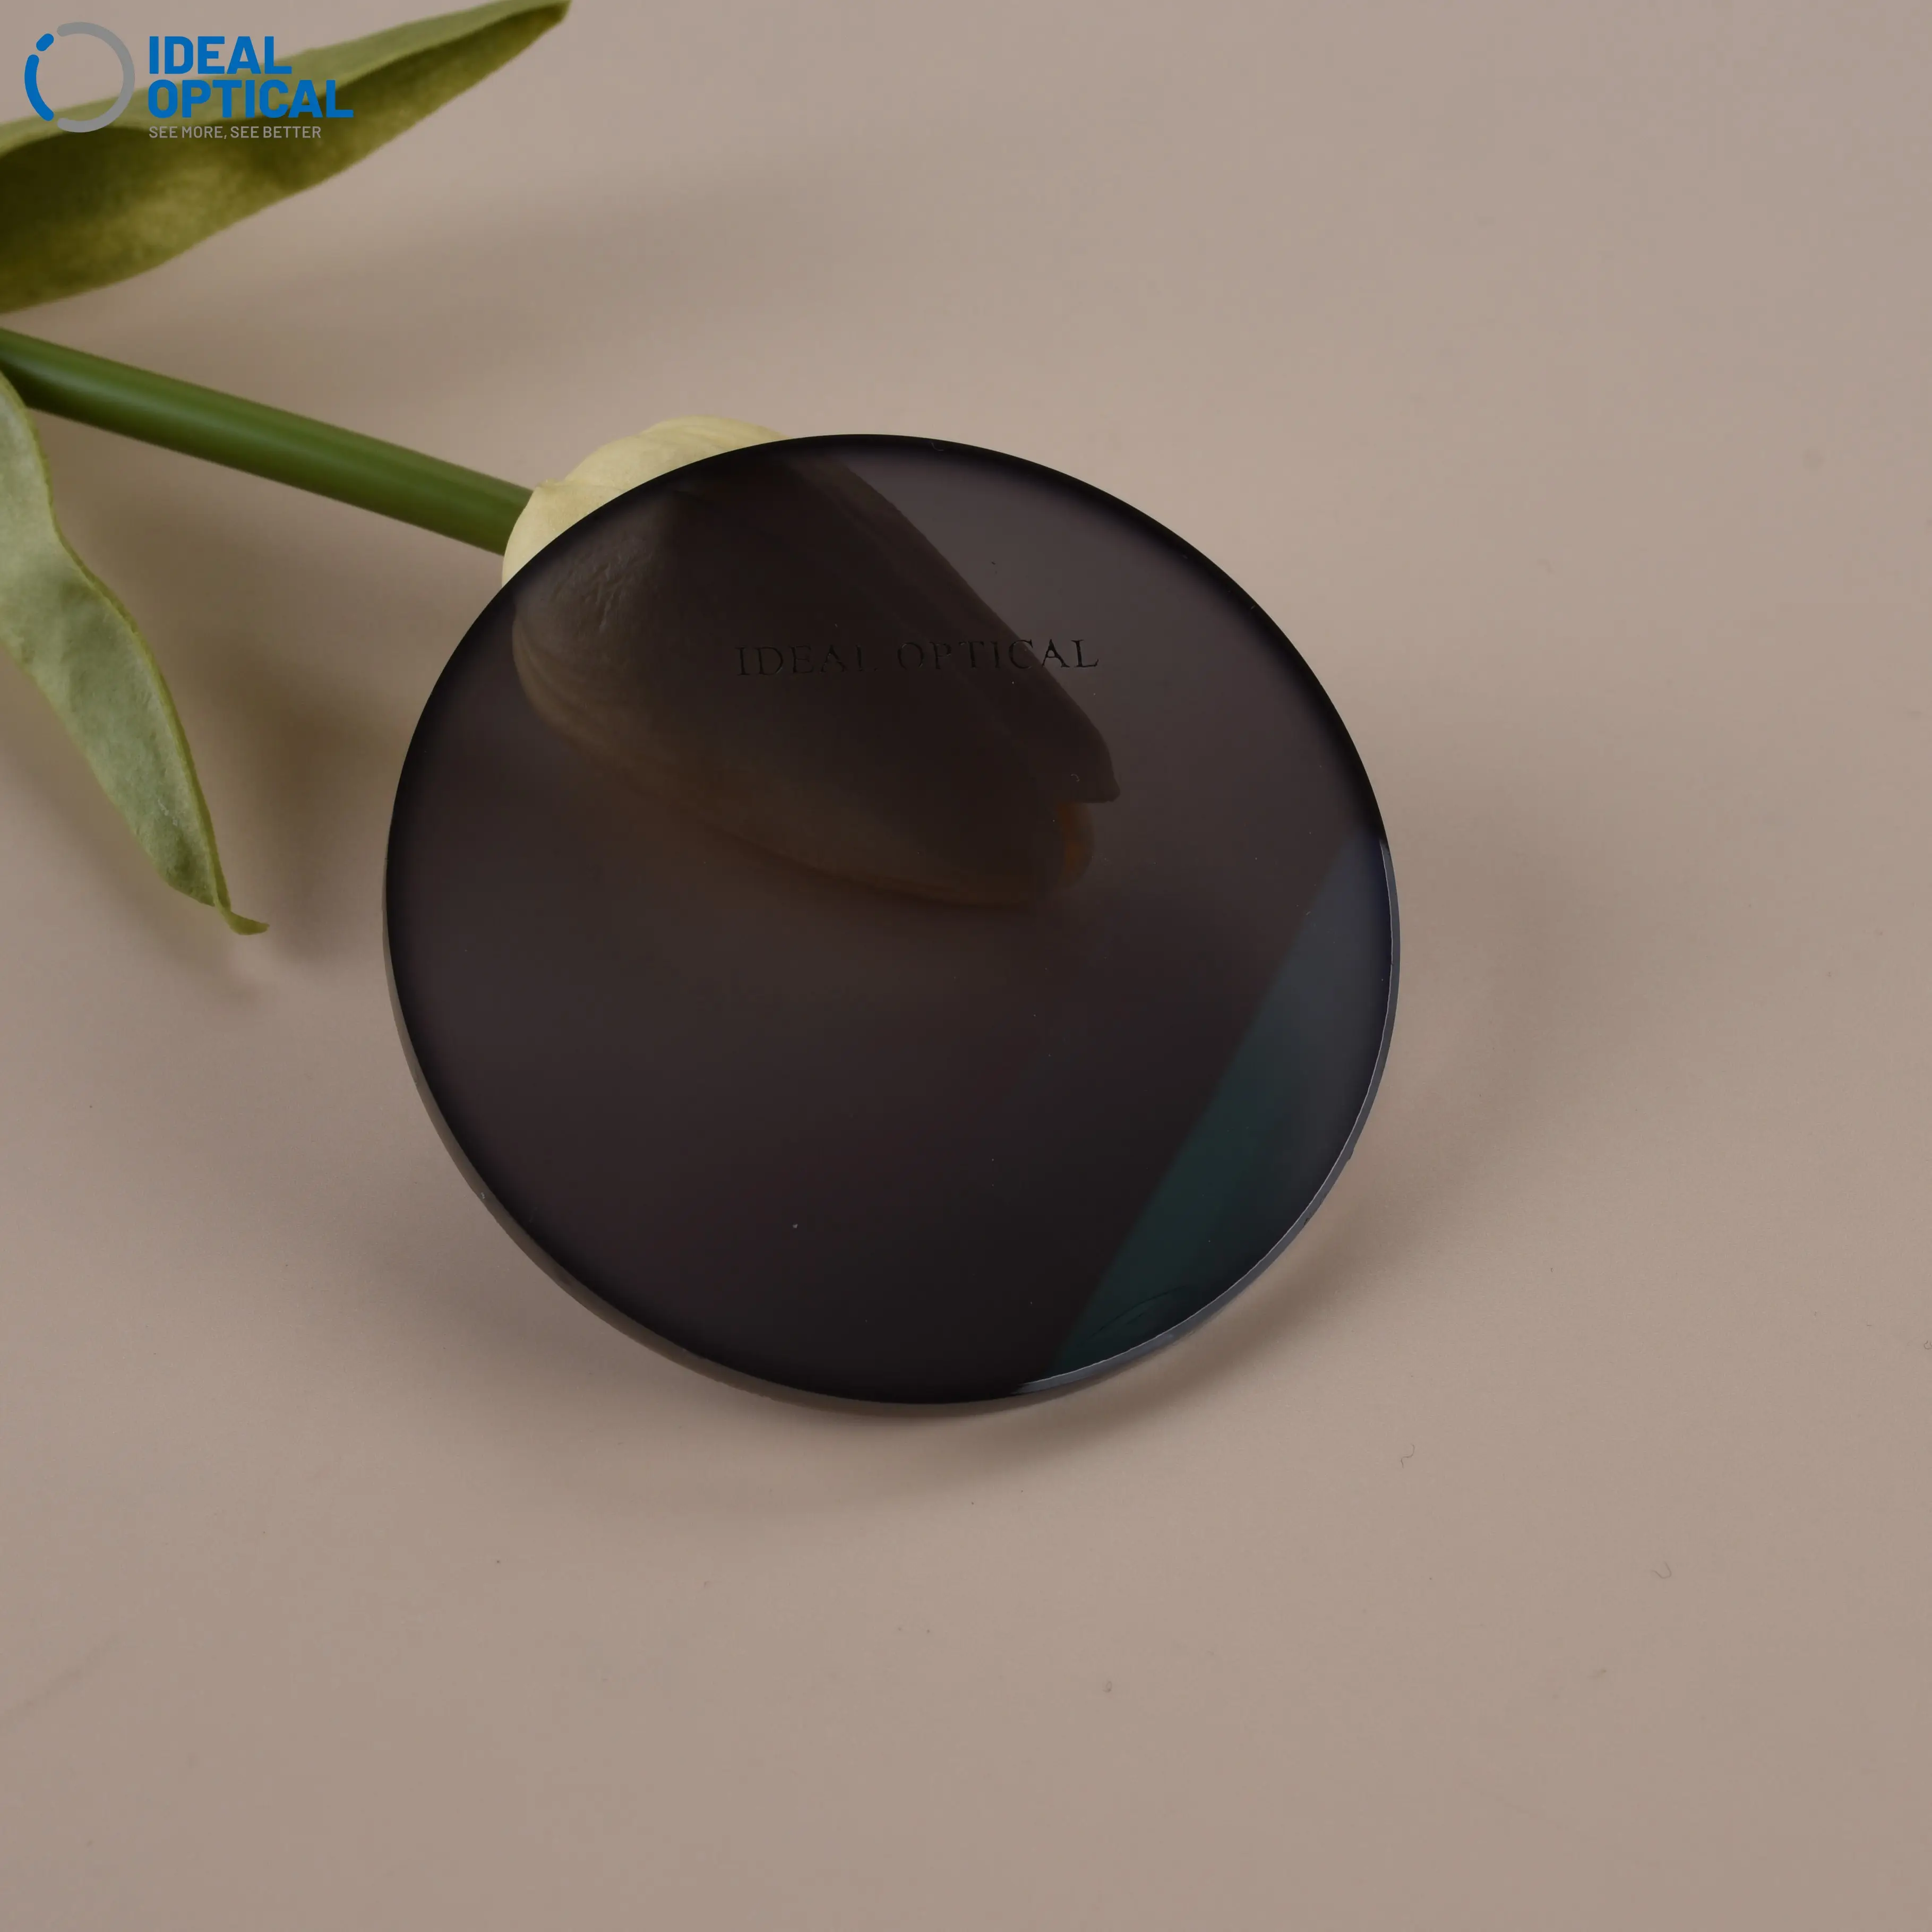 Danyang lens wholesale 1.56 blue block coating UV420 blue cut photogrey photocromic lens